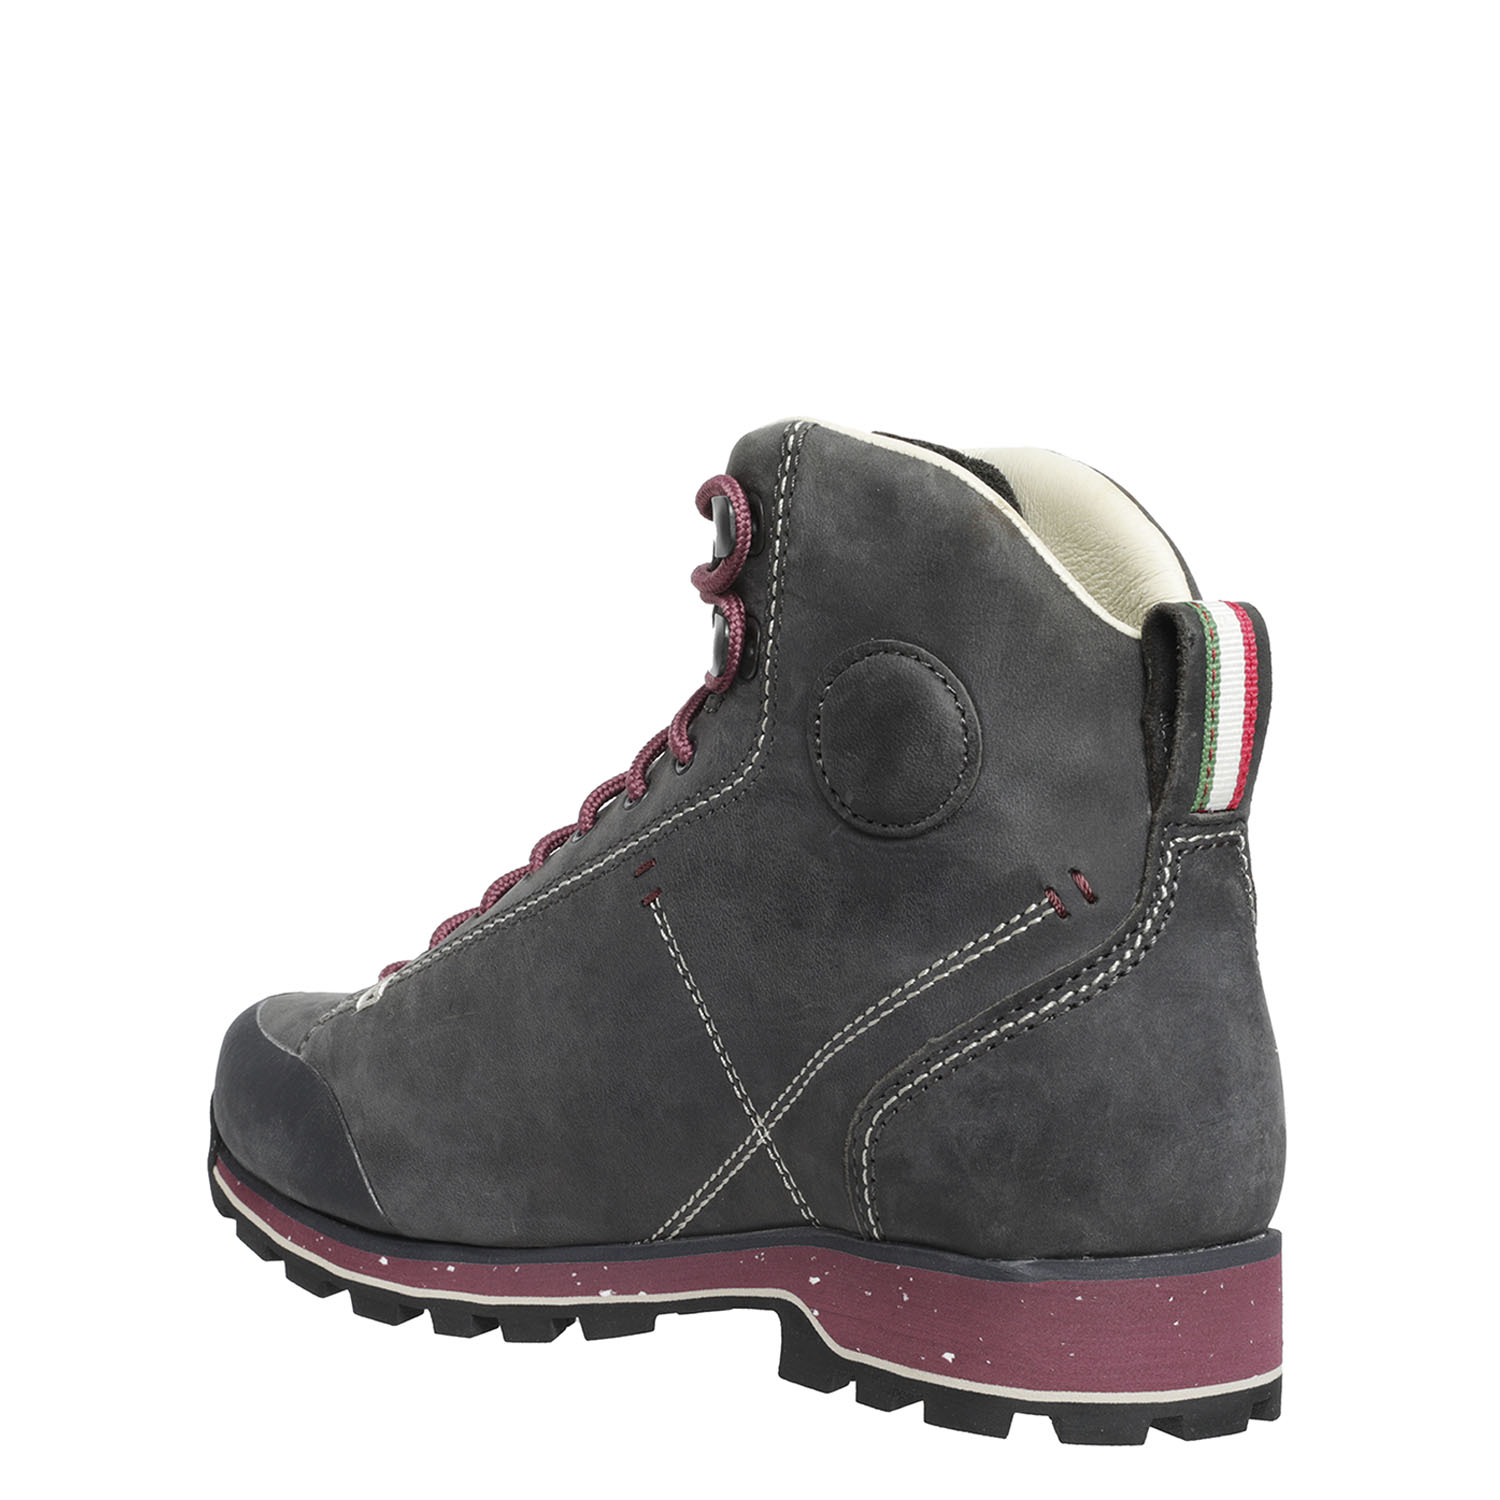 Ботинки Dolomite 54 High Fg Evo GTX W's Anthracite Grey